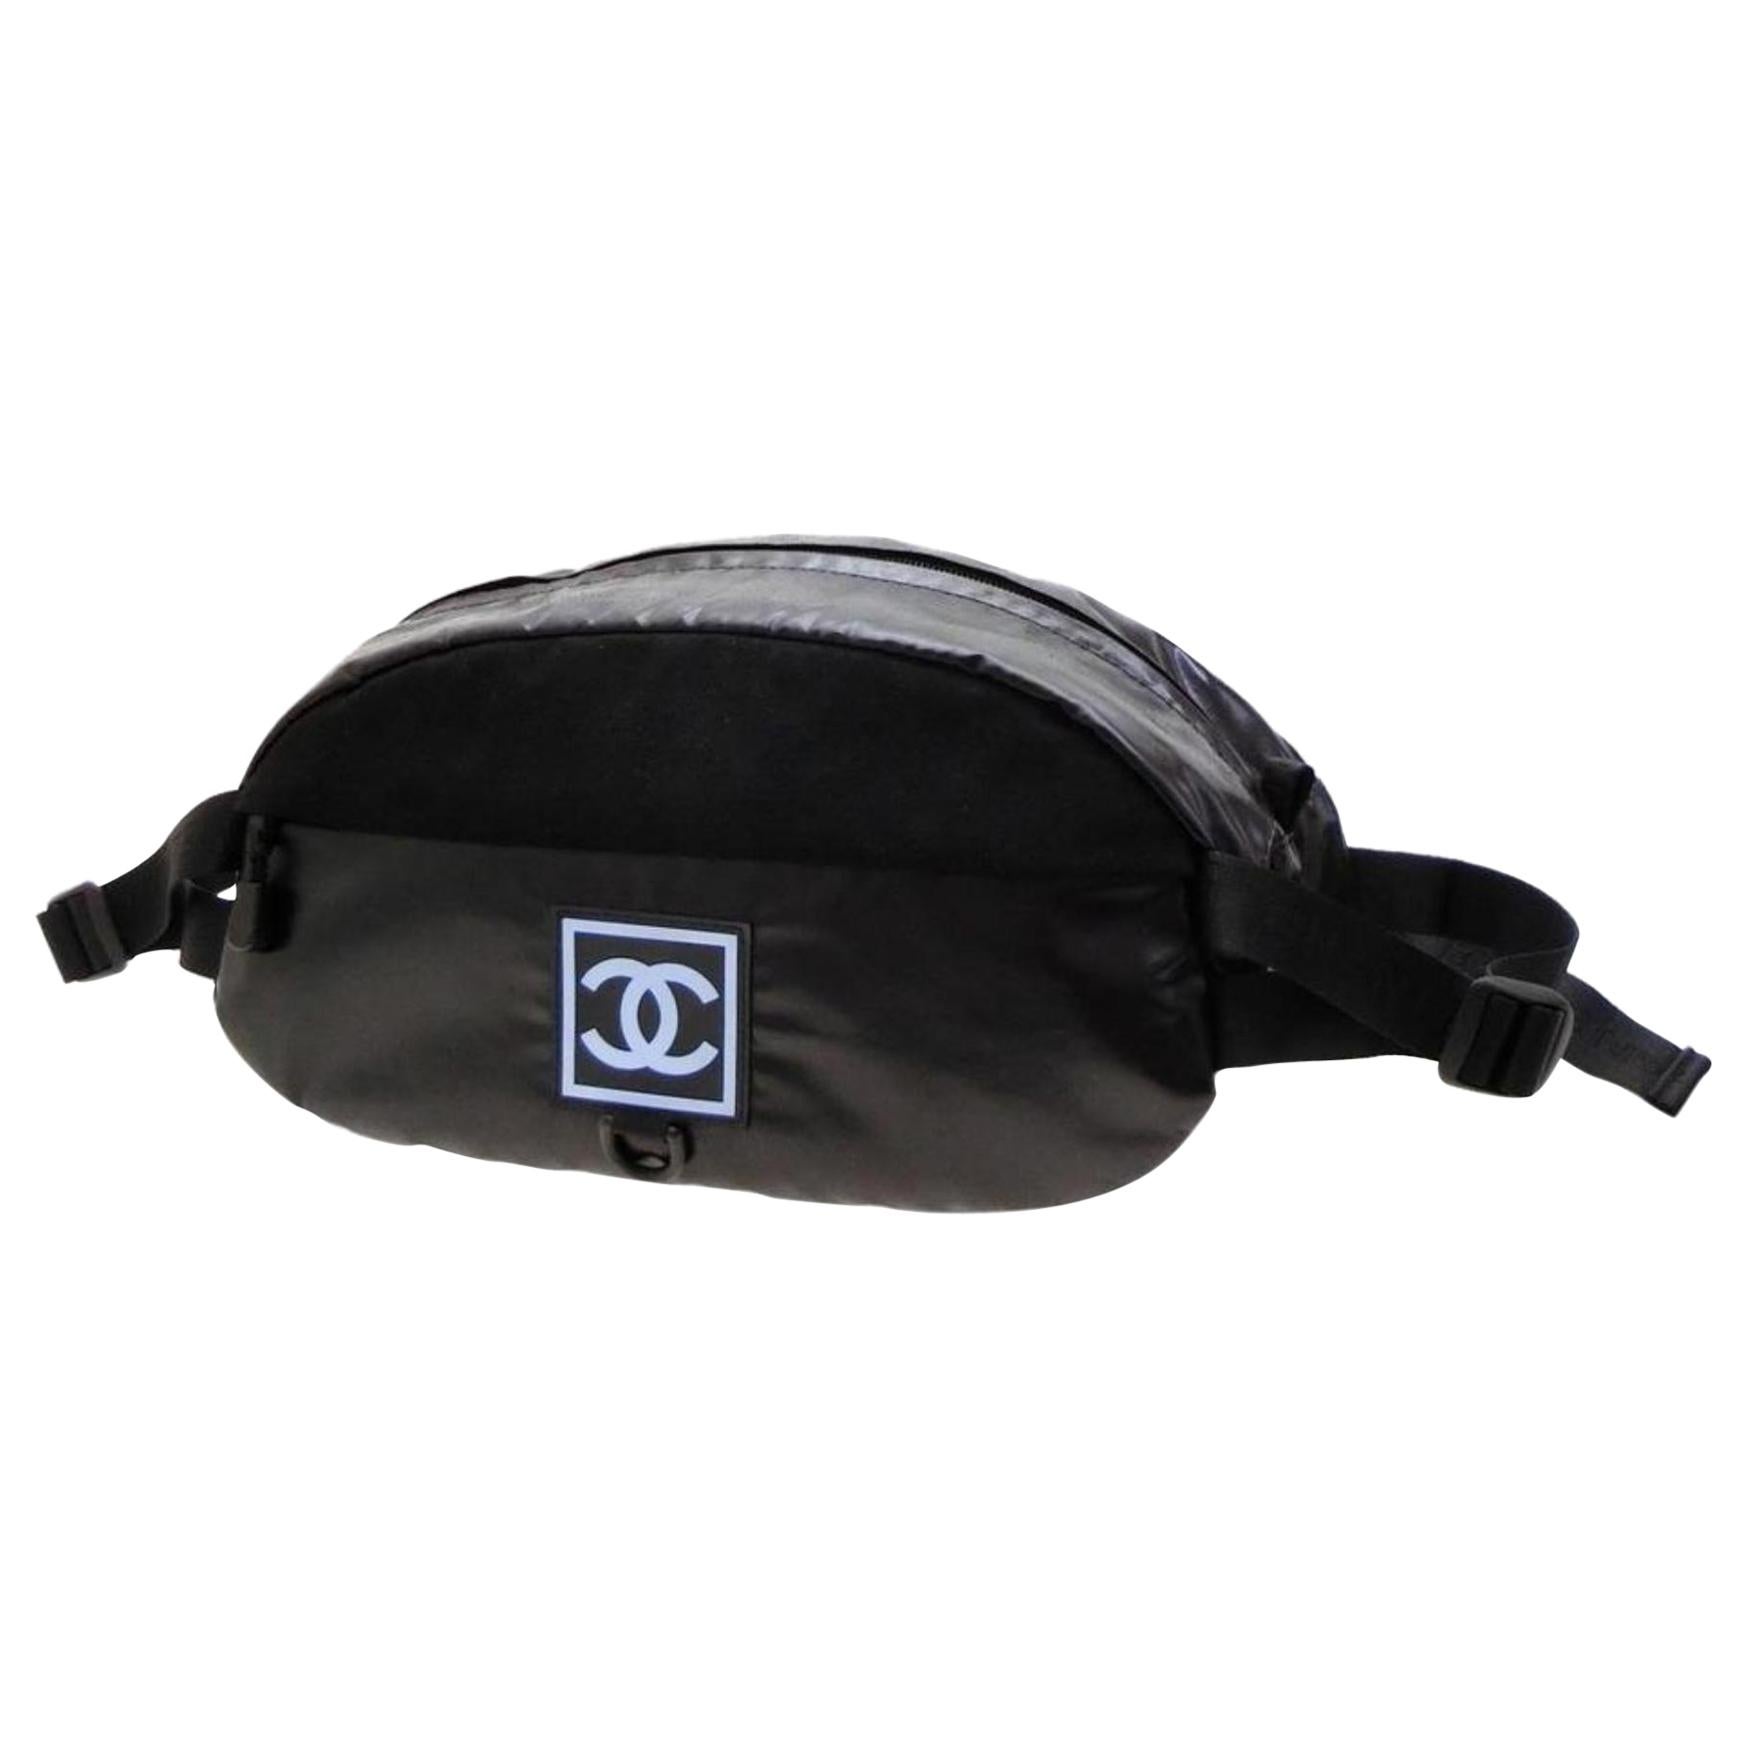 Chanel Black X Blue Cc Logo Fanny Pack Waist Pouch Bum 231453 Cosmetic Bag For Sale